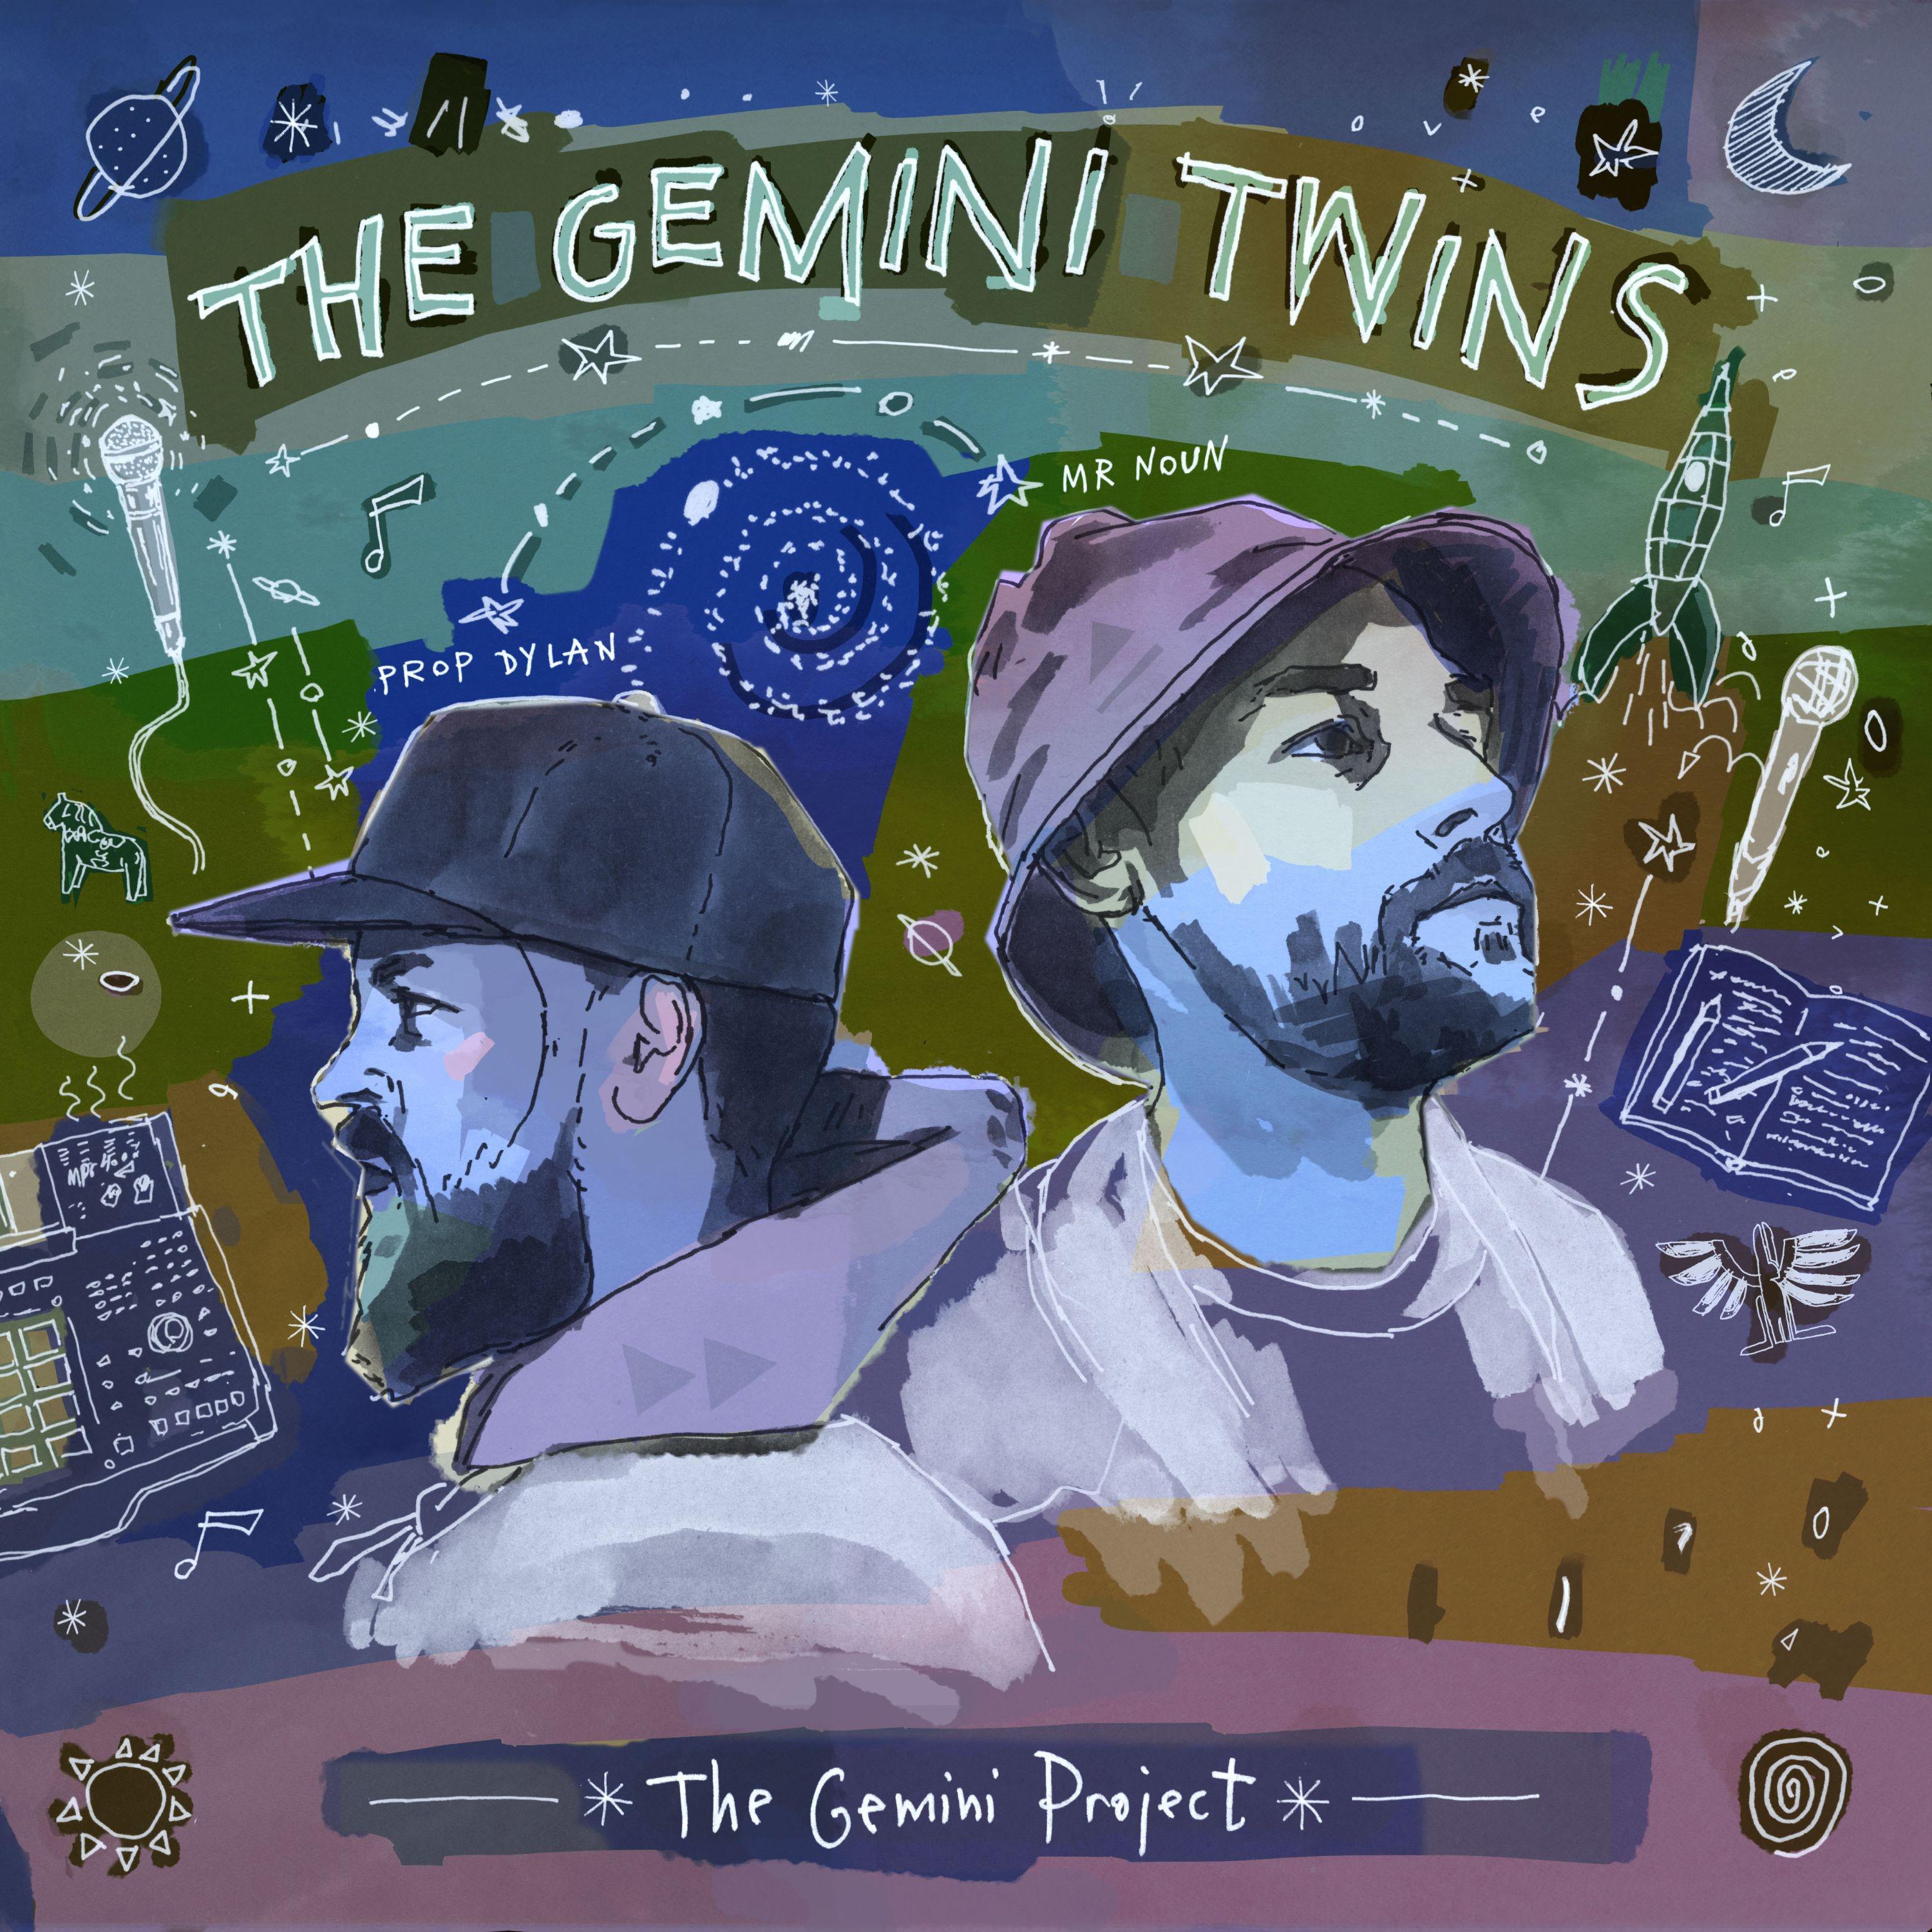 The Gemini Twins - The Next